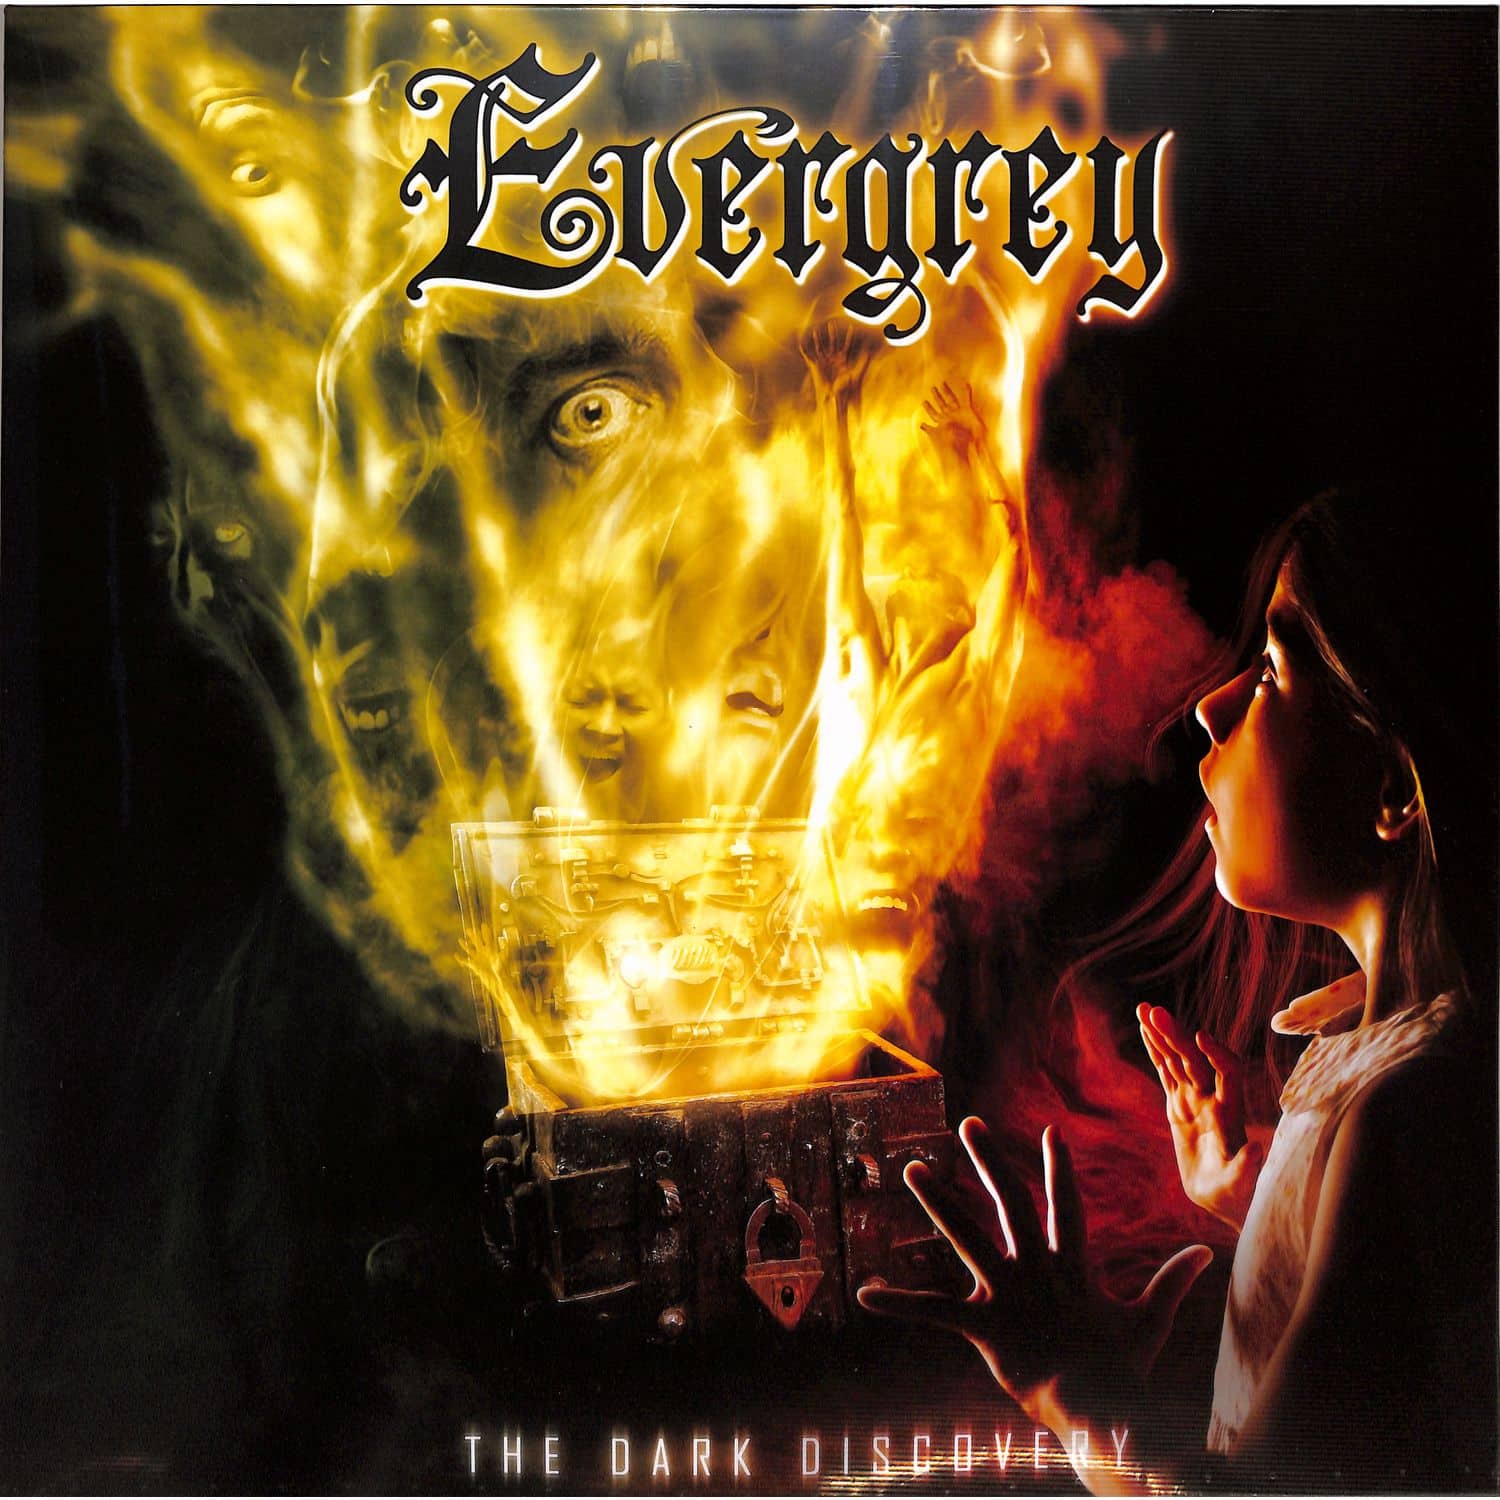 Evergrey - THE DARK DISCOVERY 